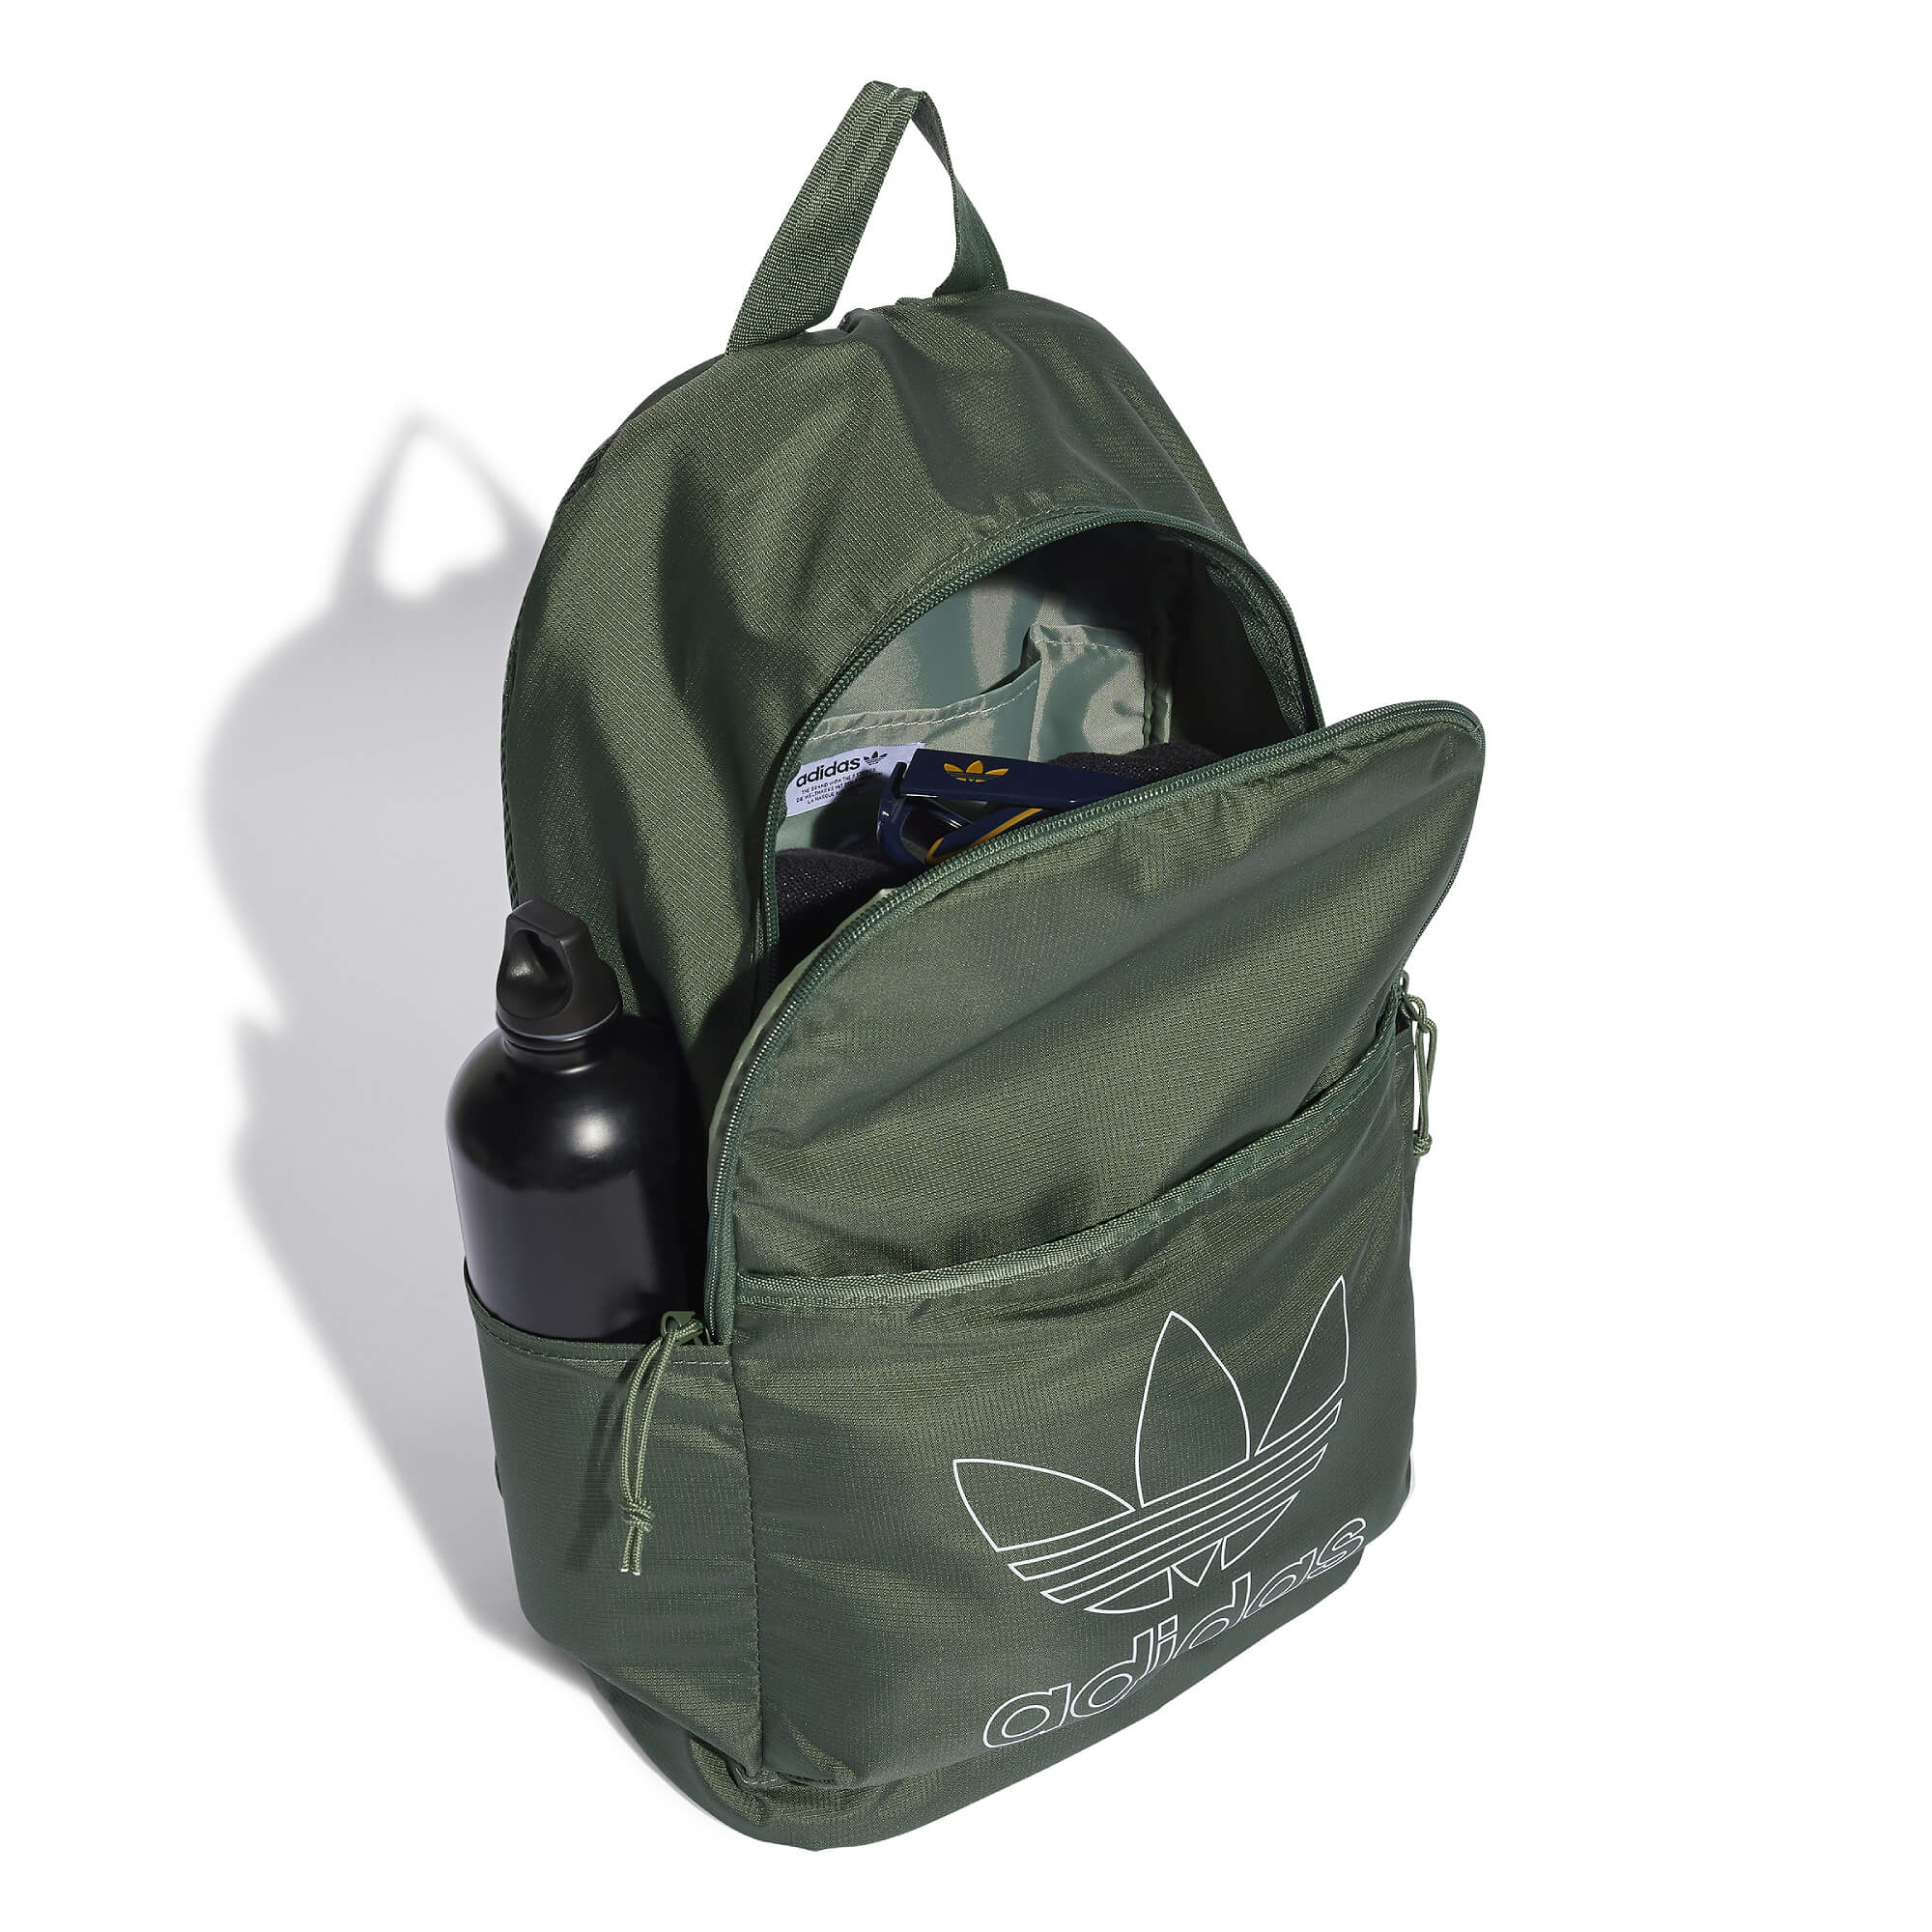 Adidas Adicolor Trefoil Backpack Bag Green Oxide